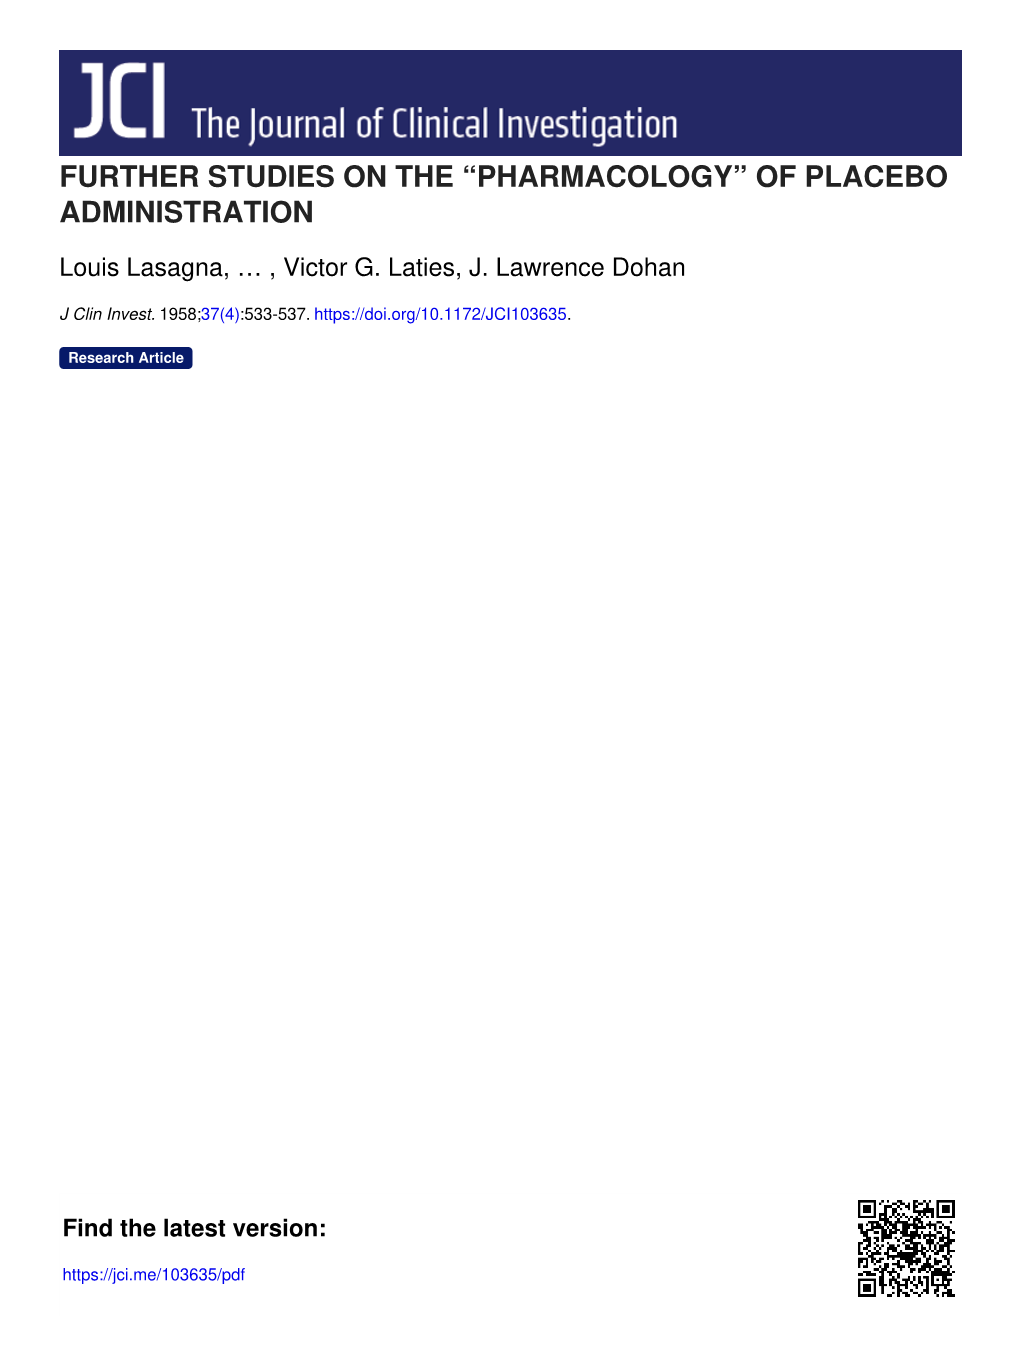 Pharmacology” of Placebo Administration